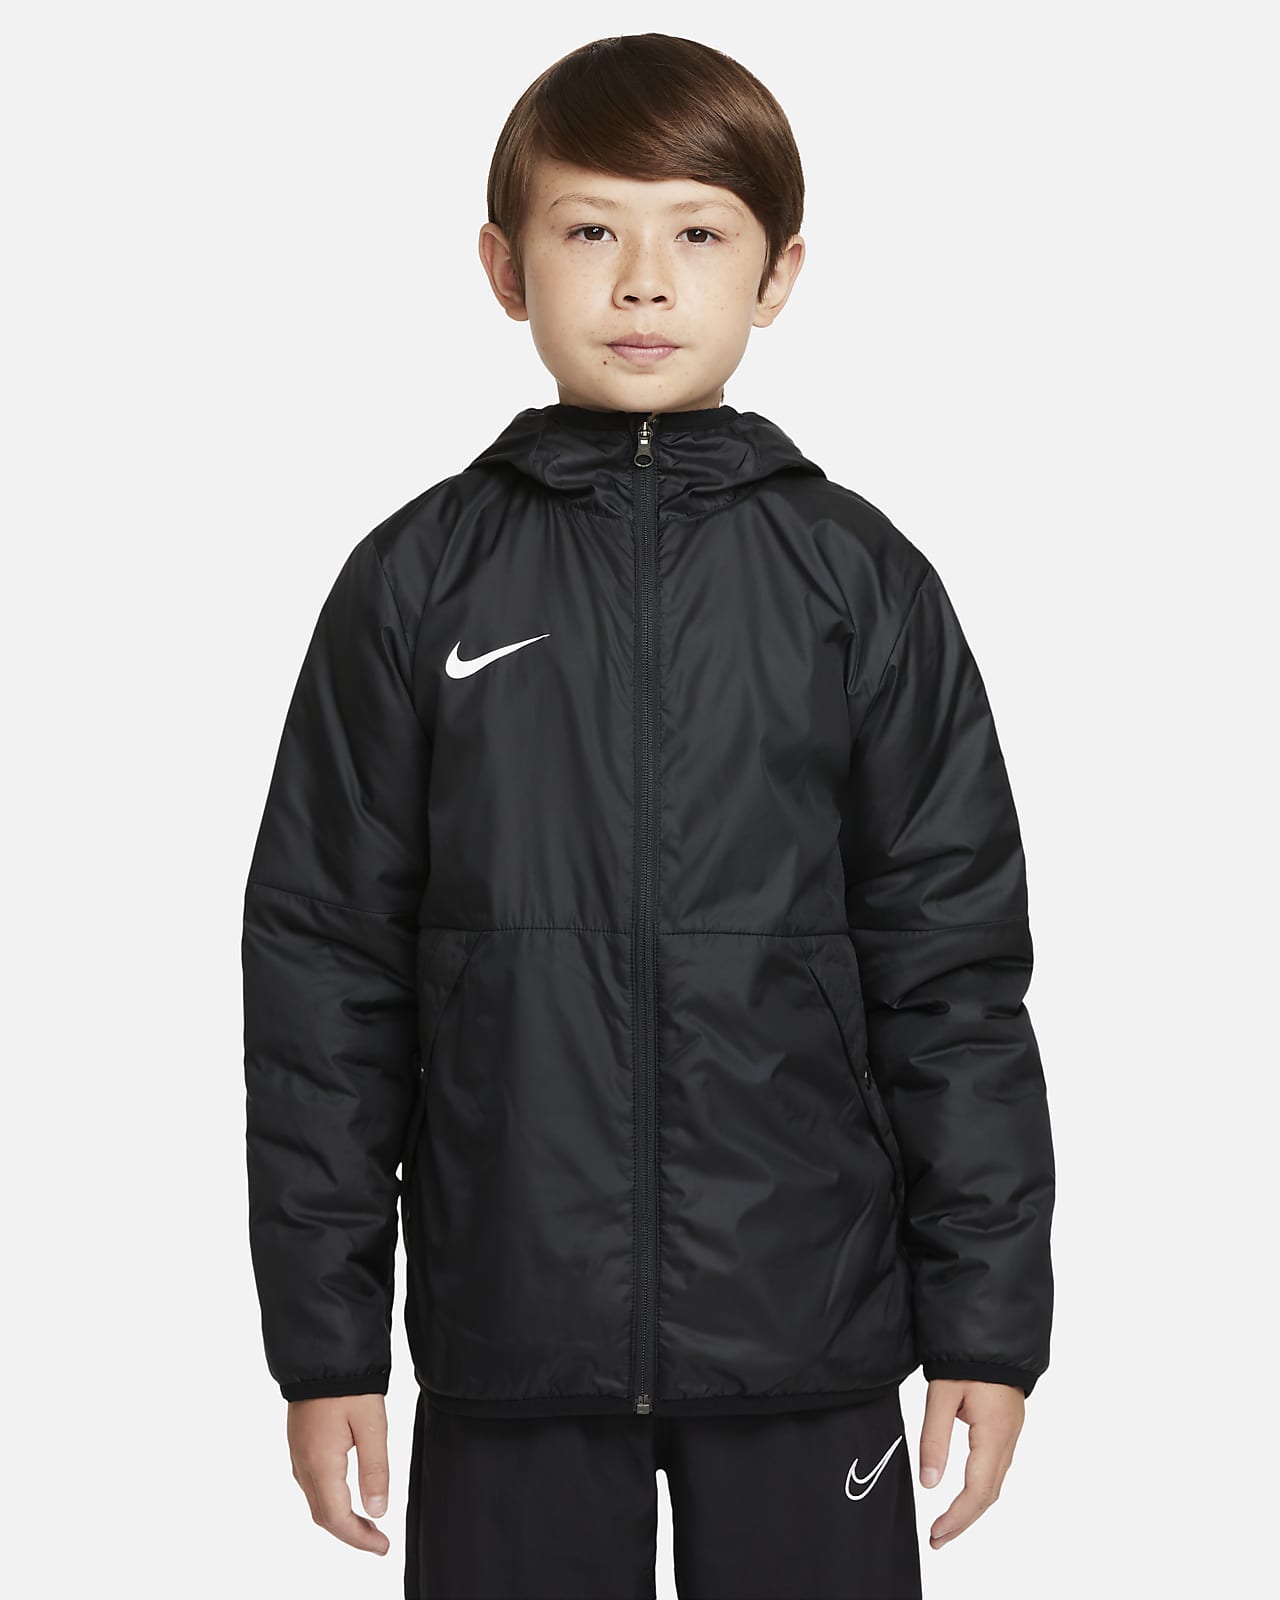 Nike Therma Repel Park Kids' Jacket. JP